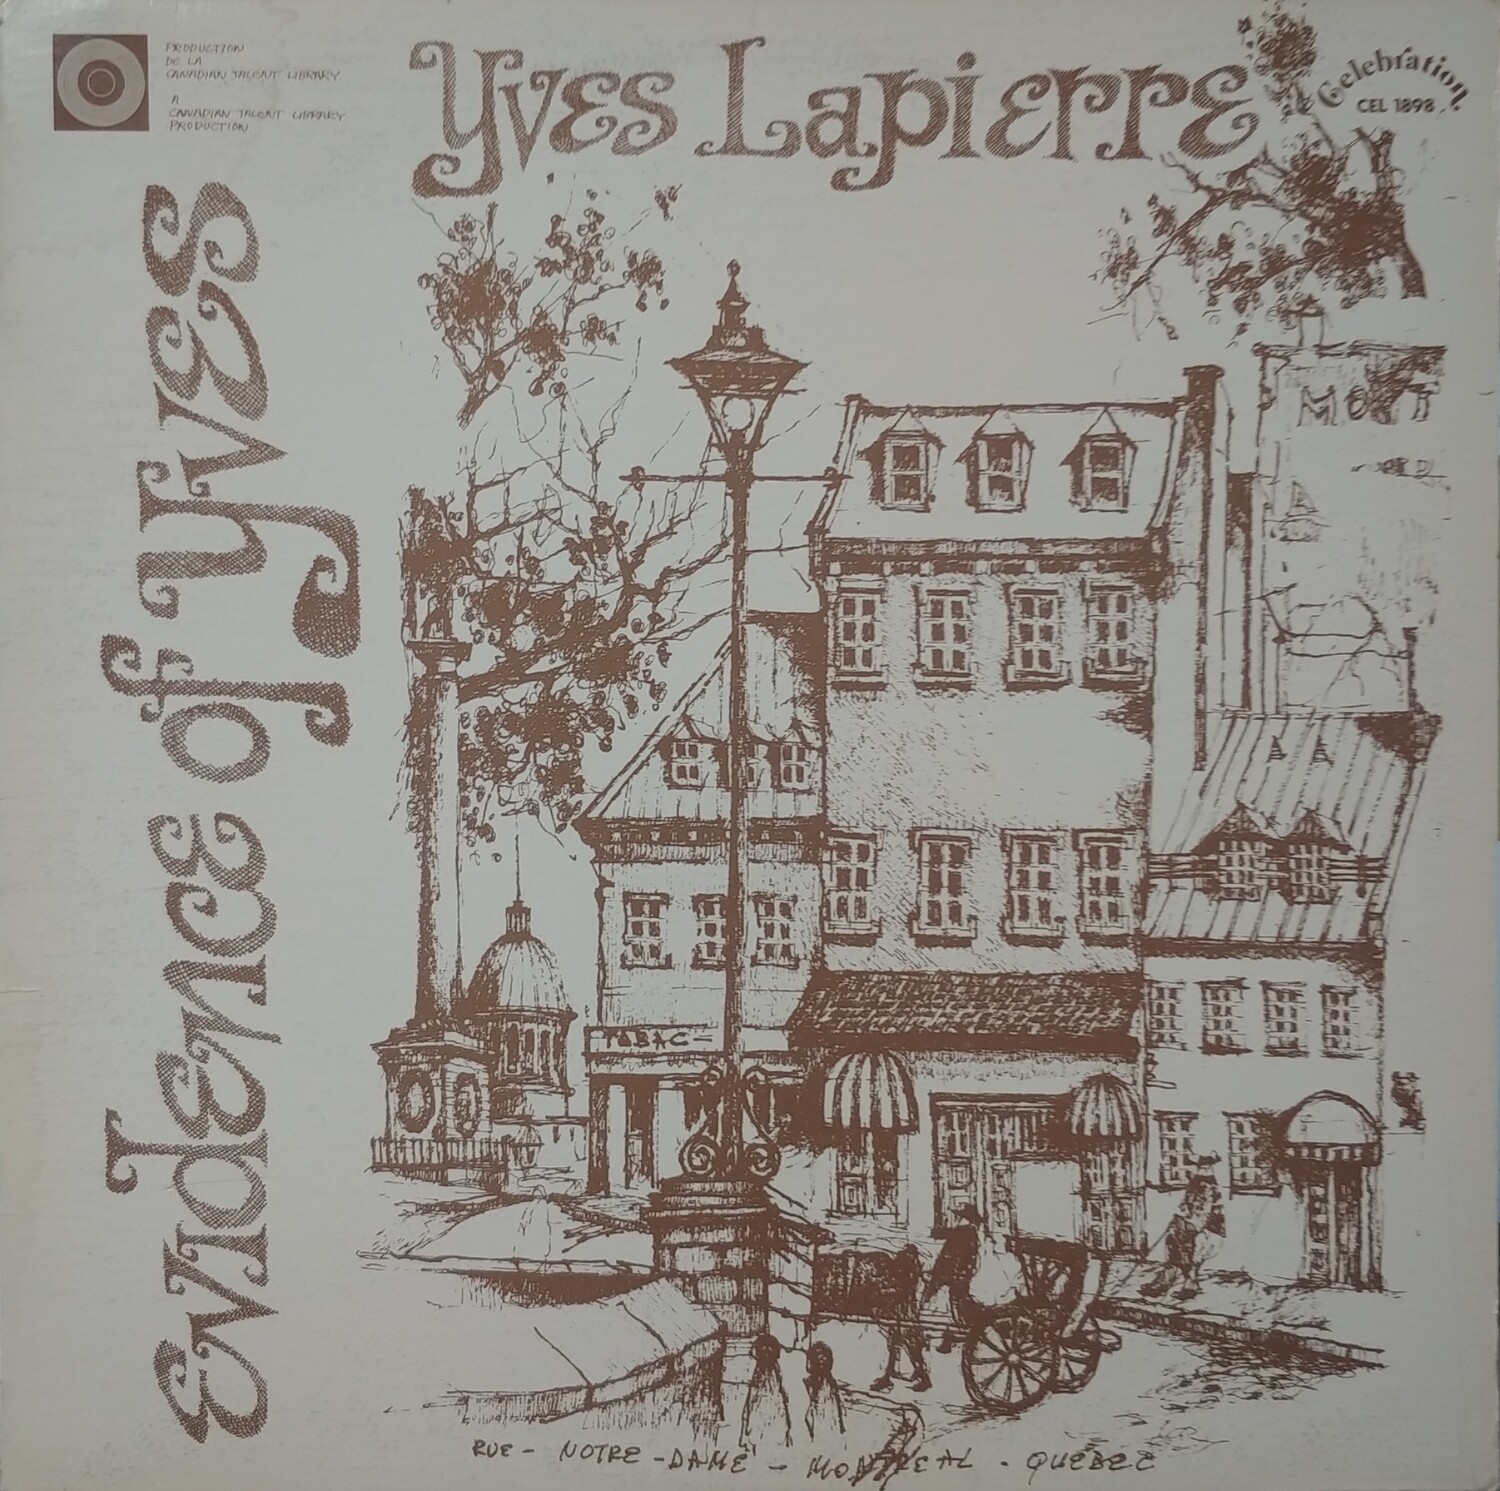 Yves Lapierre - Evidence of Yves